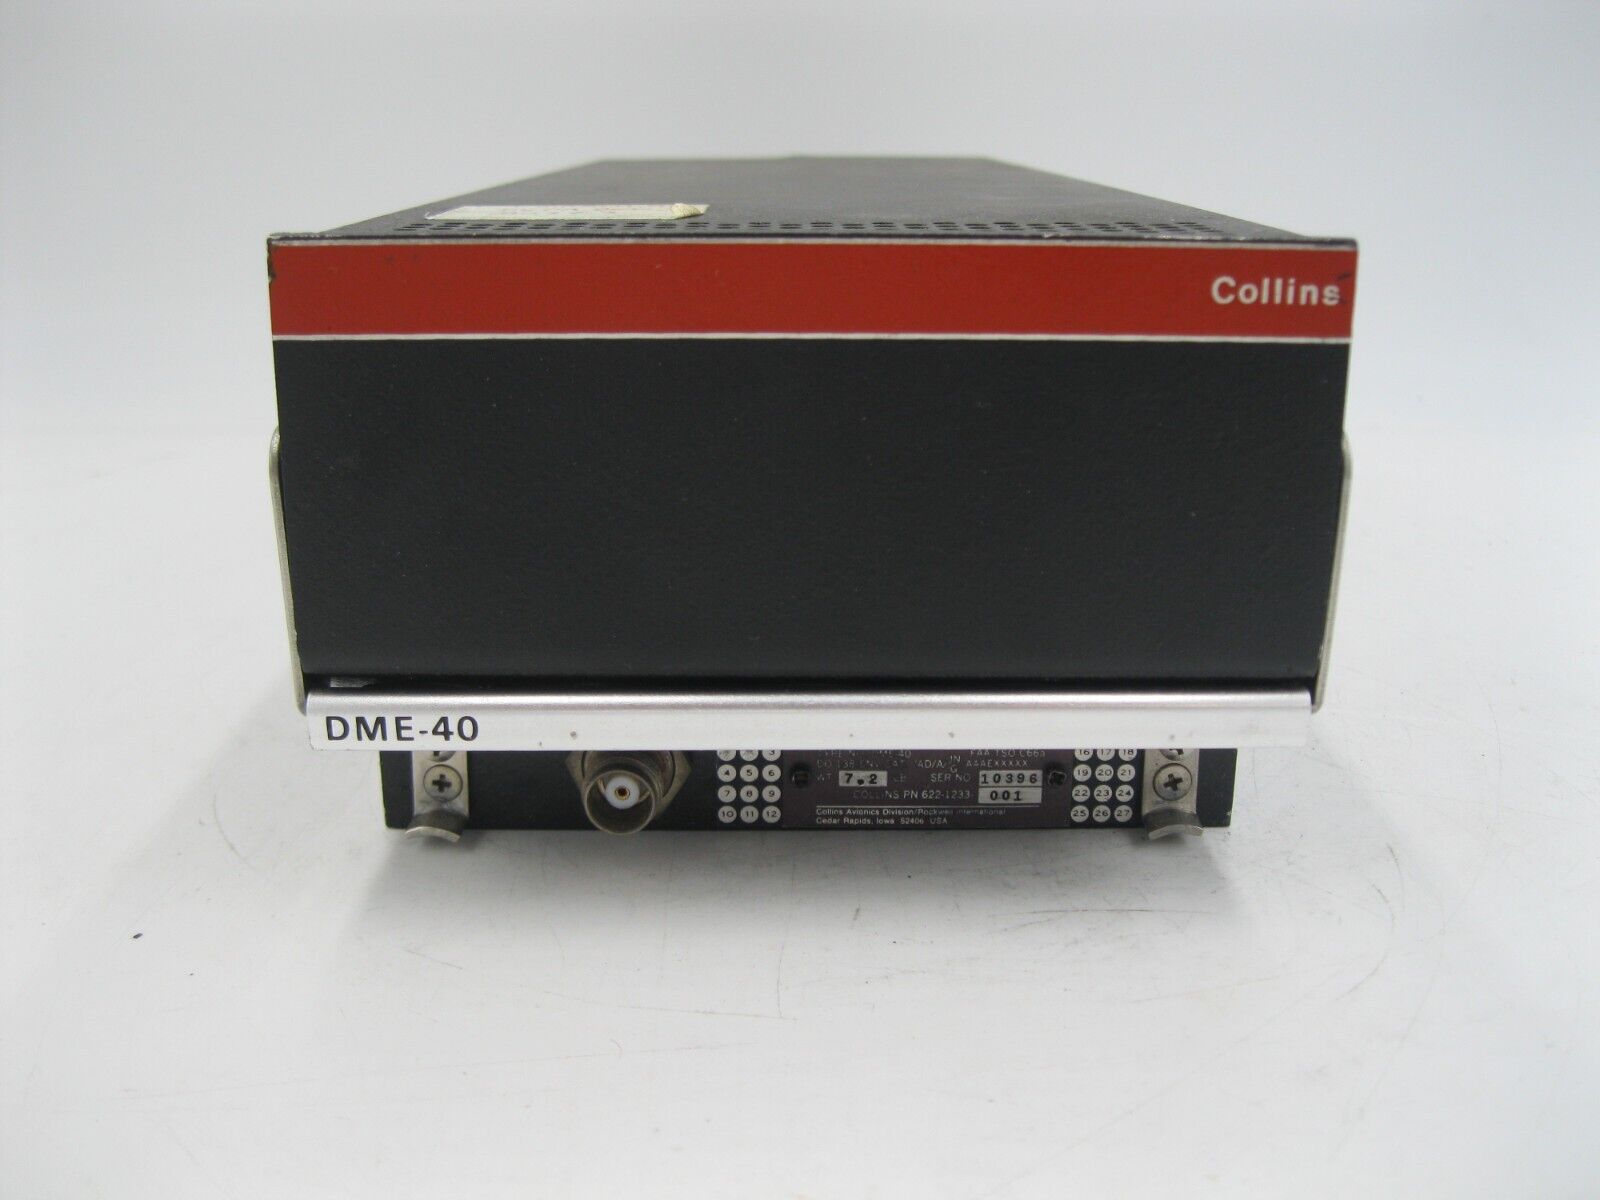 Rockwell Collins DME-40 DME Transceiver PN: 622-1233-001